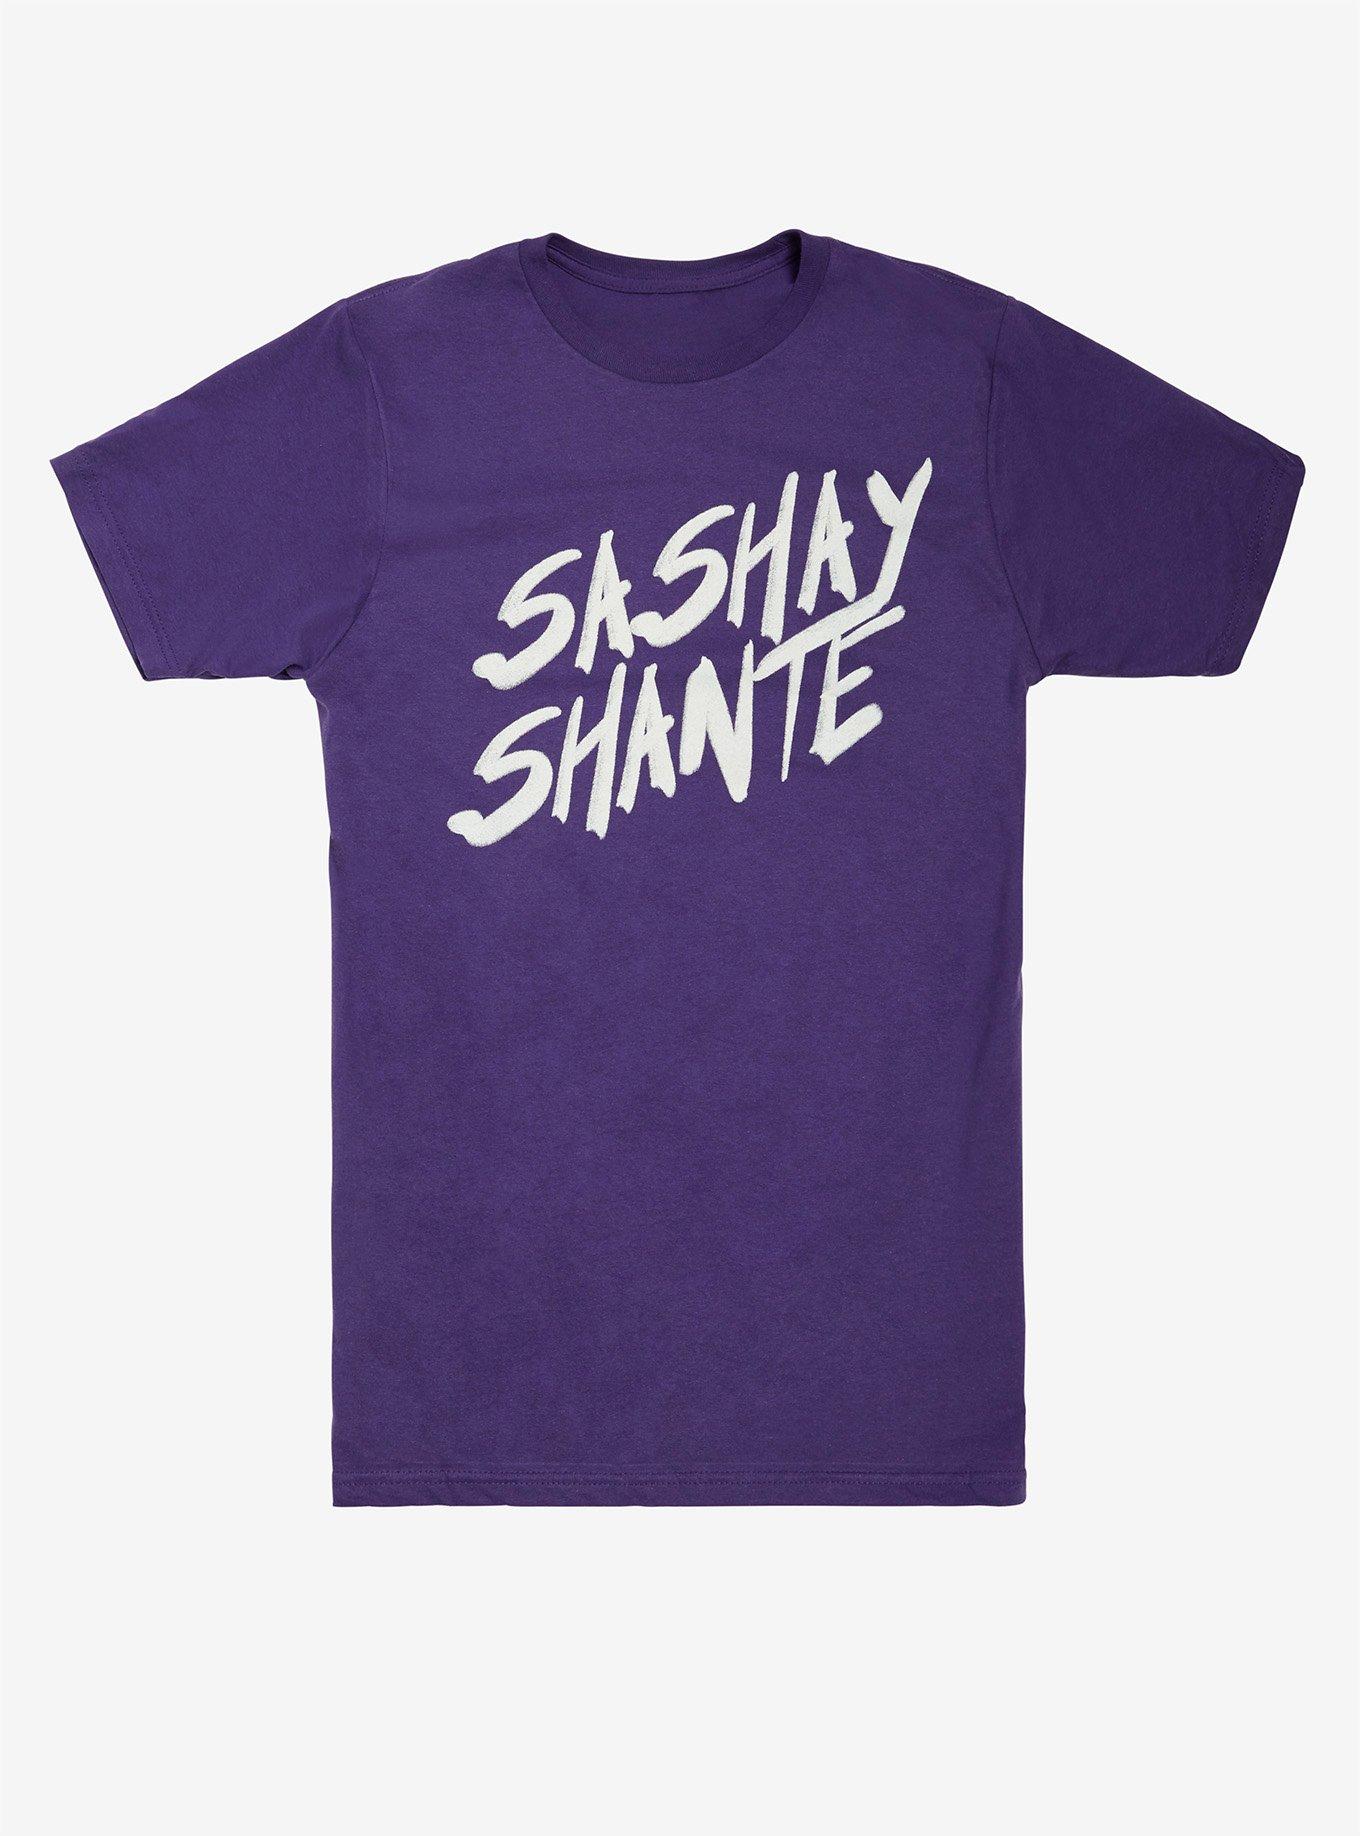 RuPaul Sashay Shante T-Shirt Hot Topic Exclusive, PURPLE, hi-res